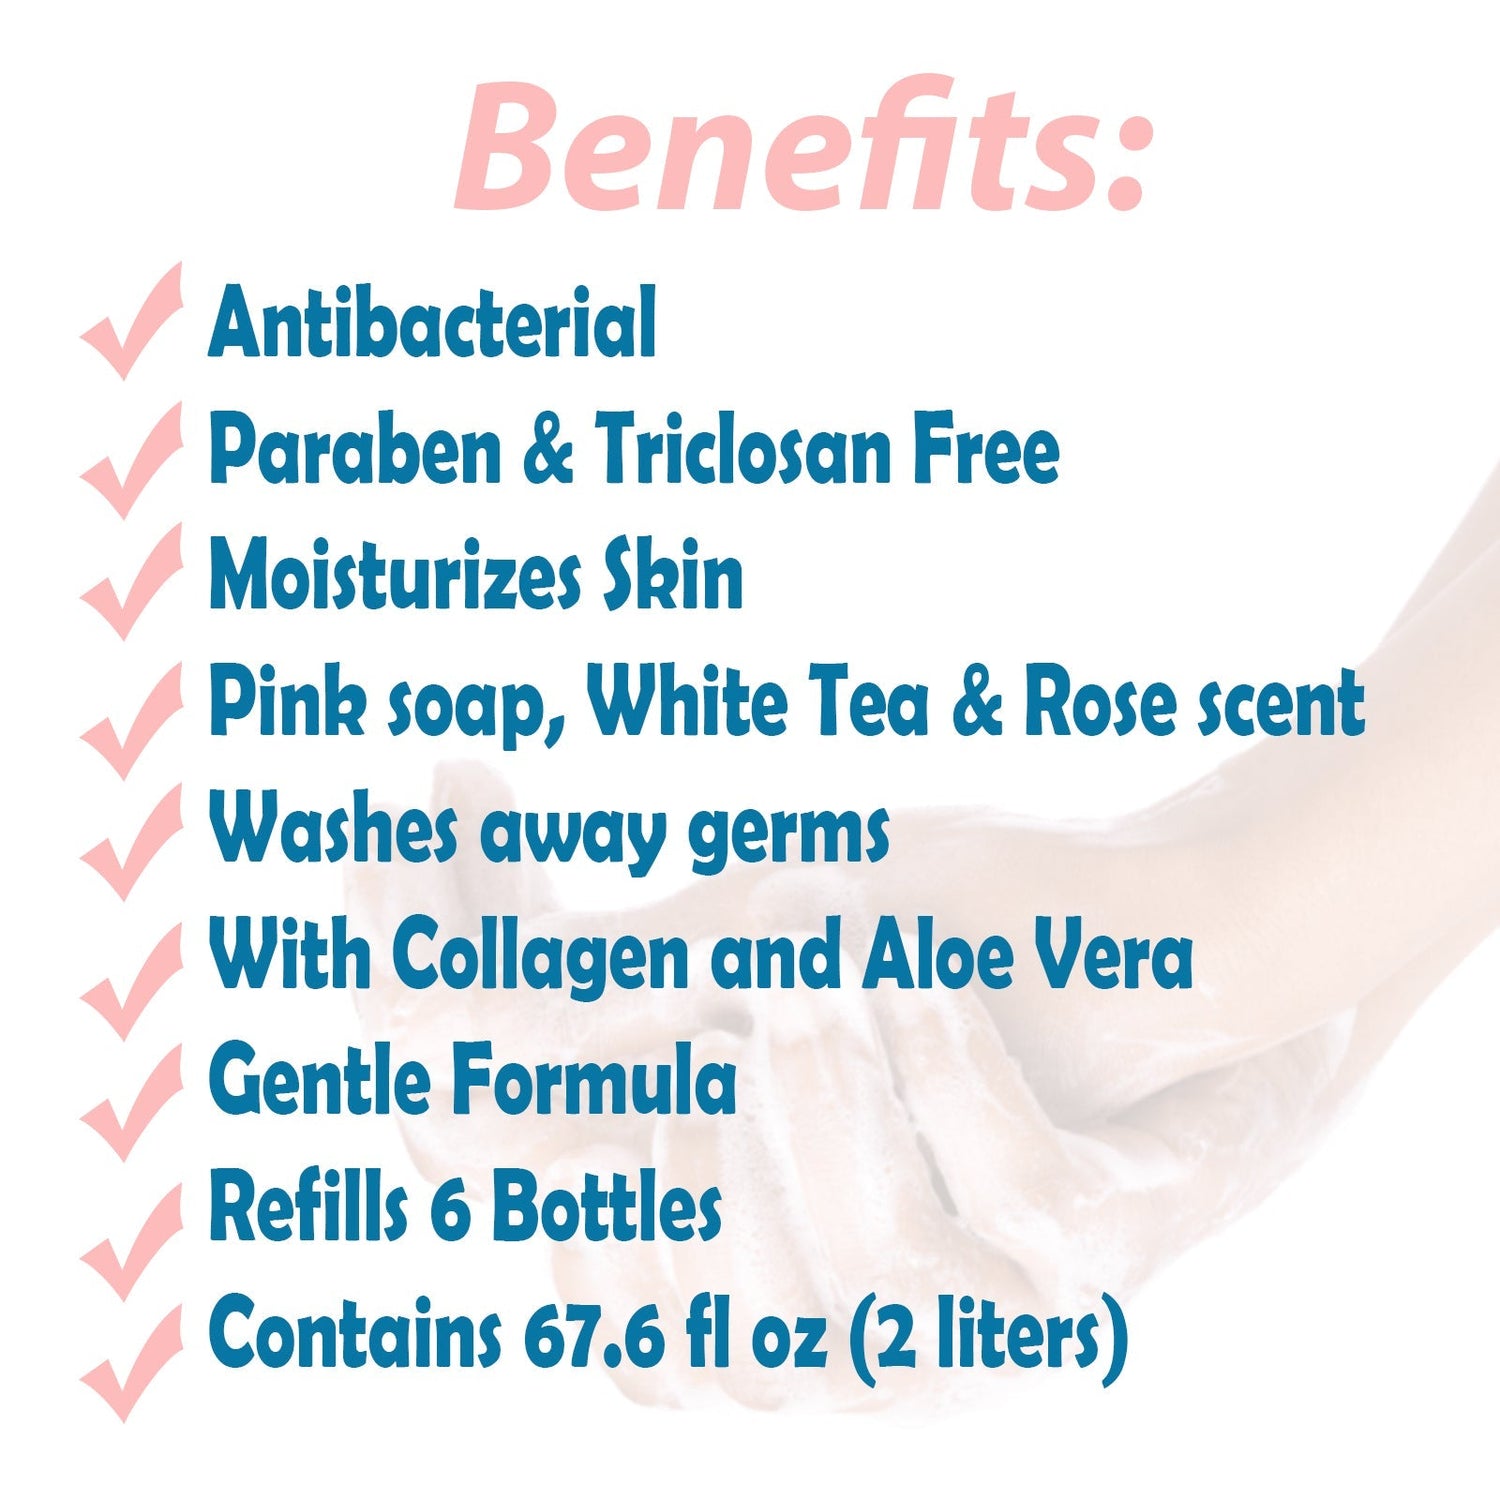 (Pack 4) Superpharma Liquid Hand Soap Refill, Tea & Roses, 256 oz - USA Medical Supply